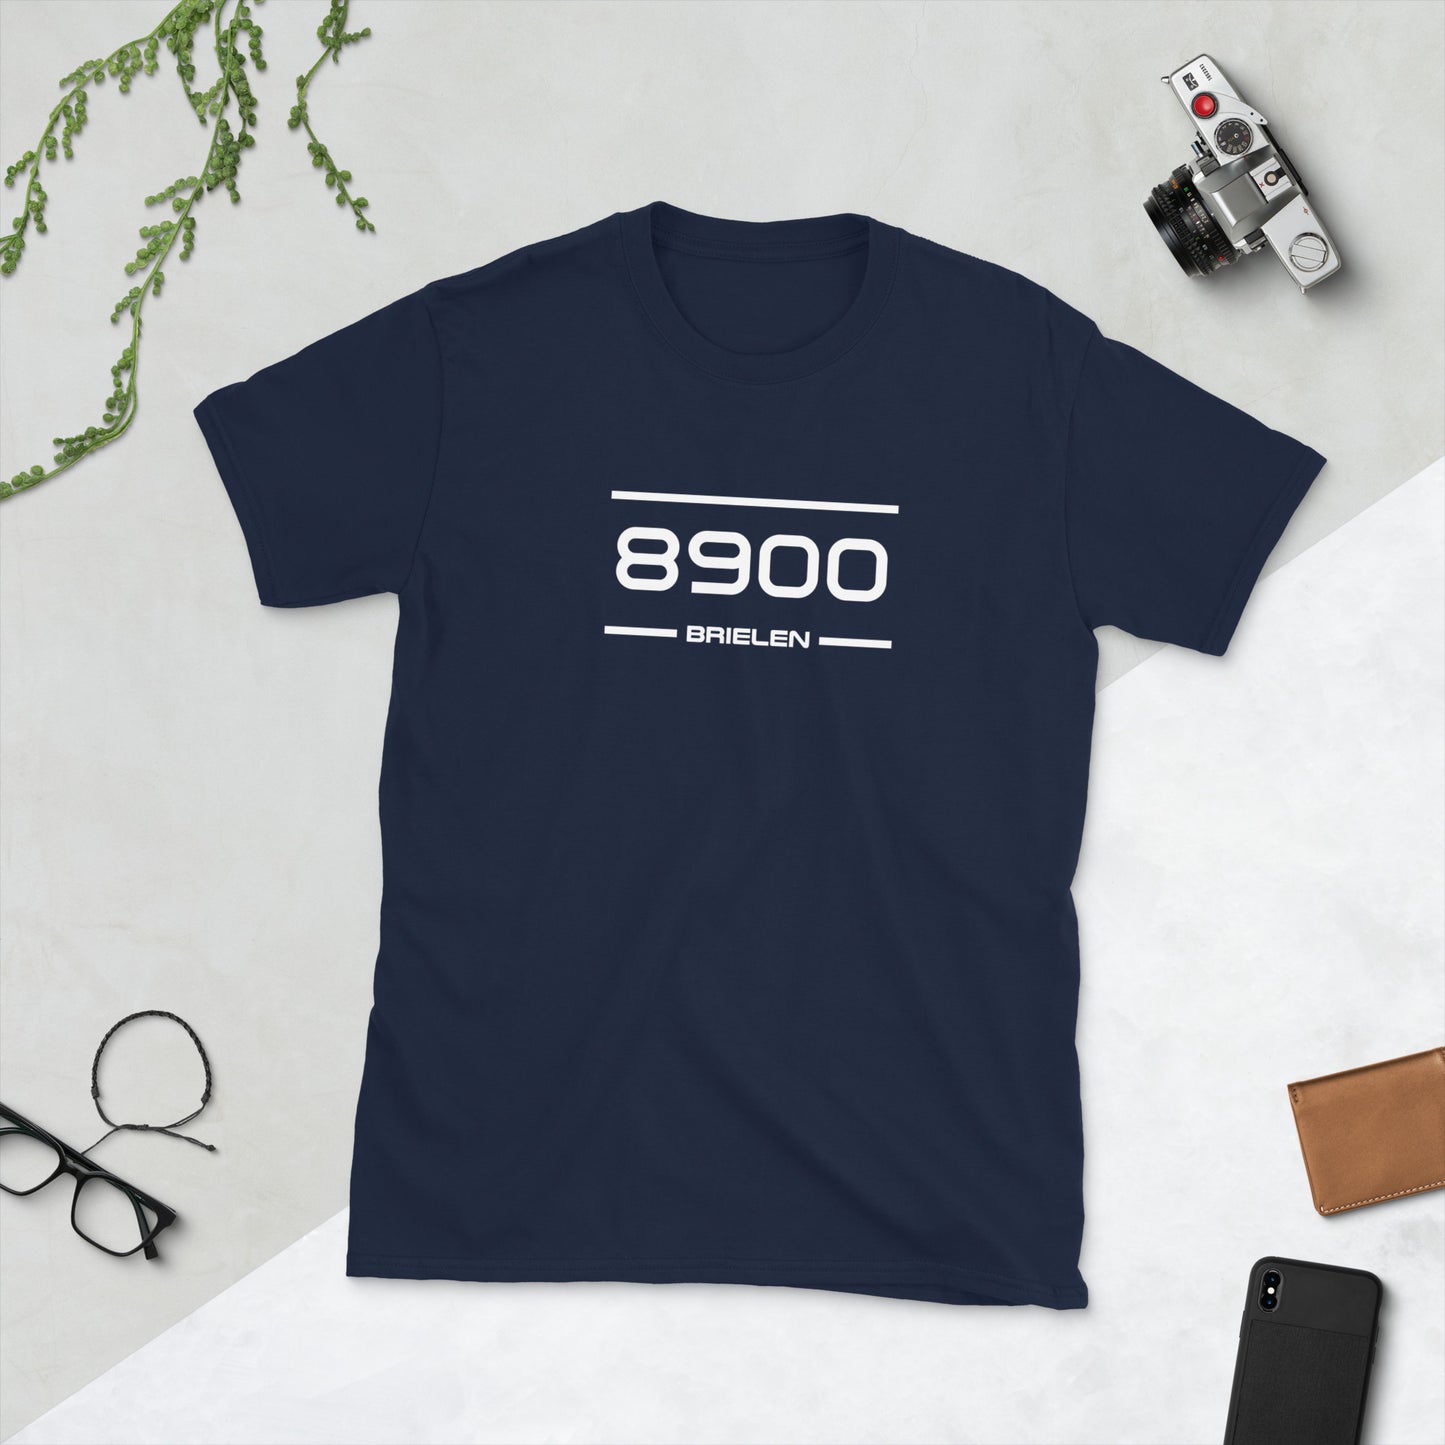 Tshirt - 8900 - Brielen